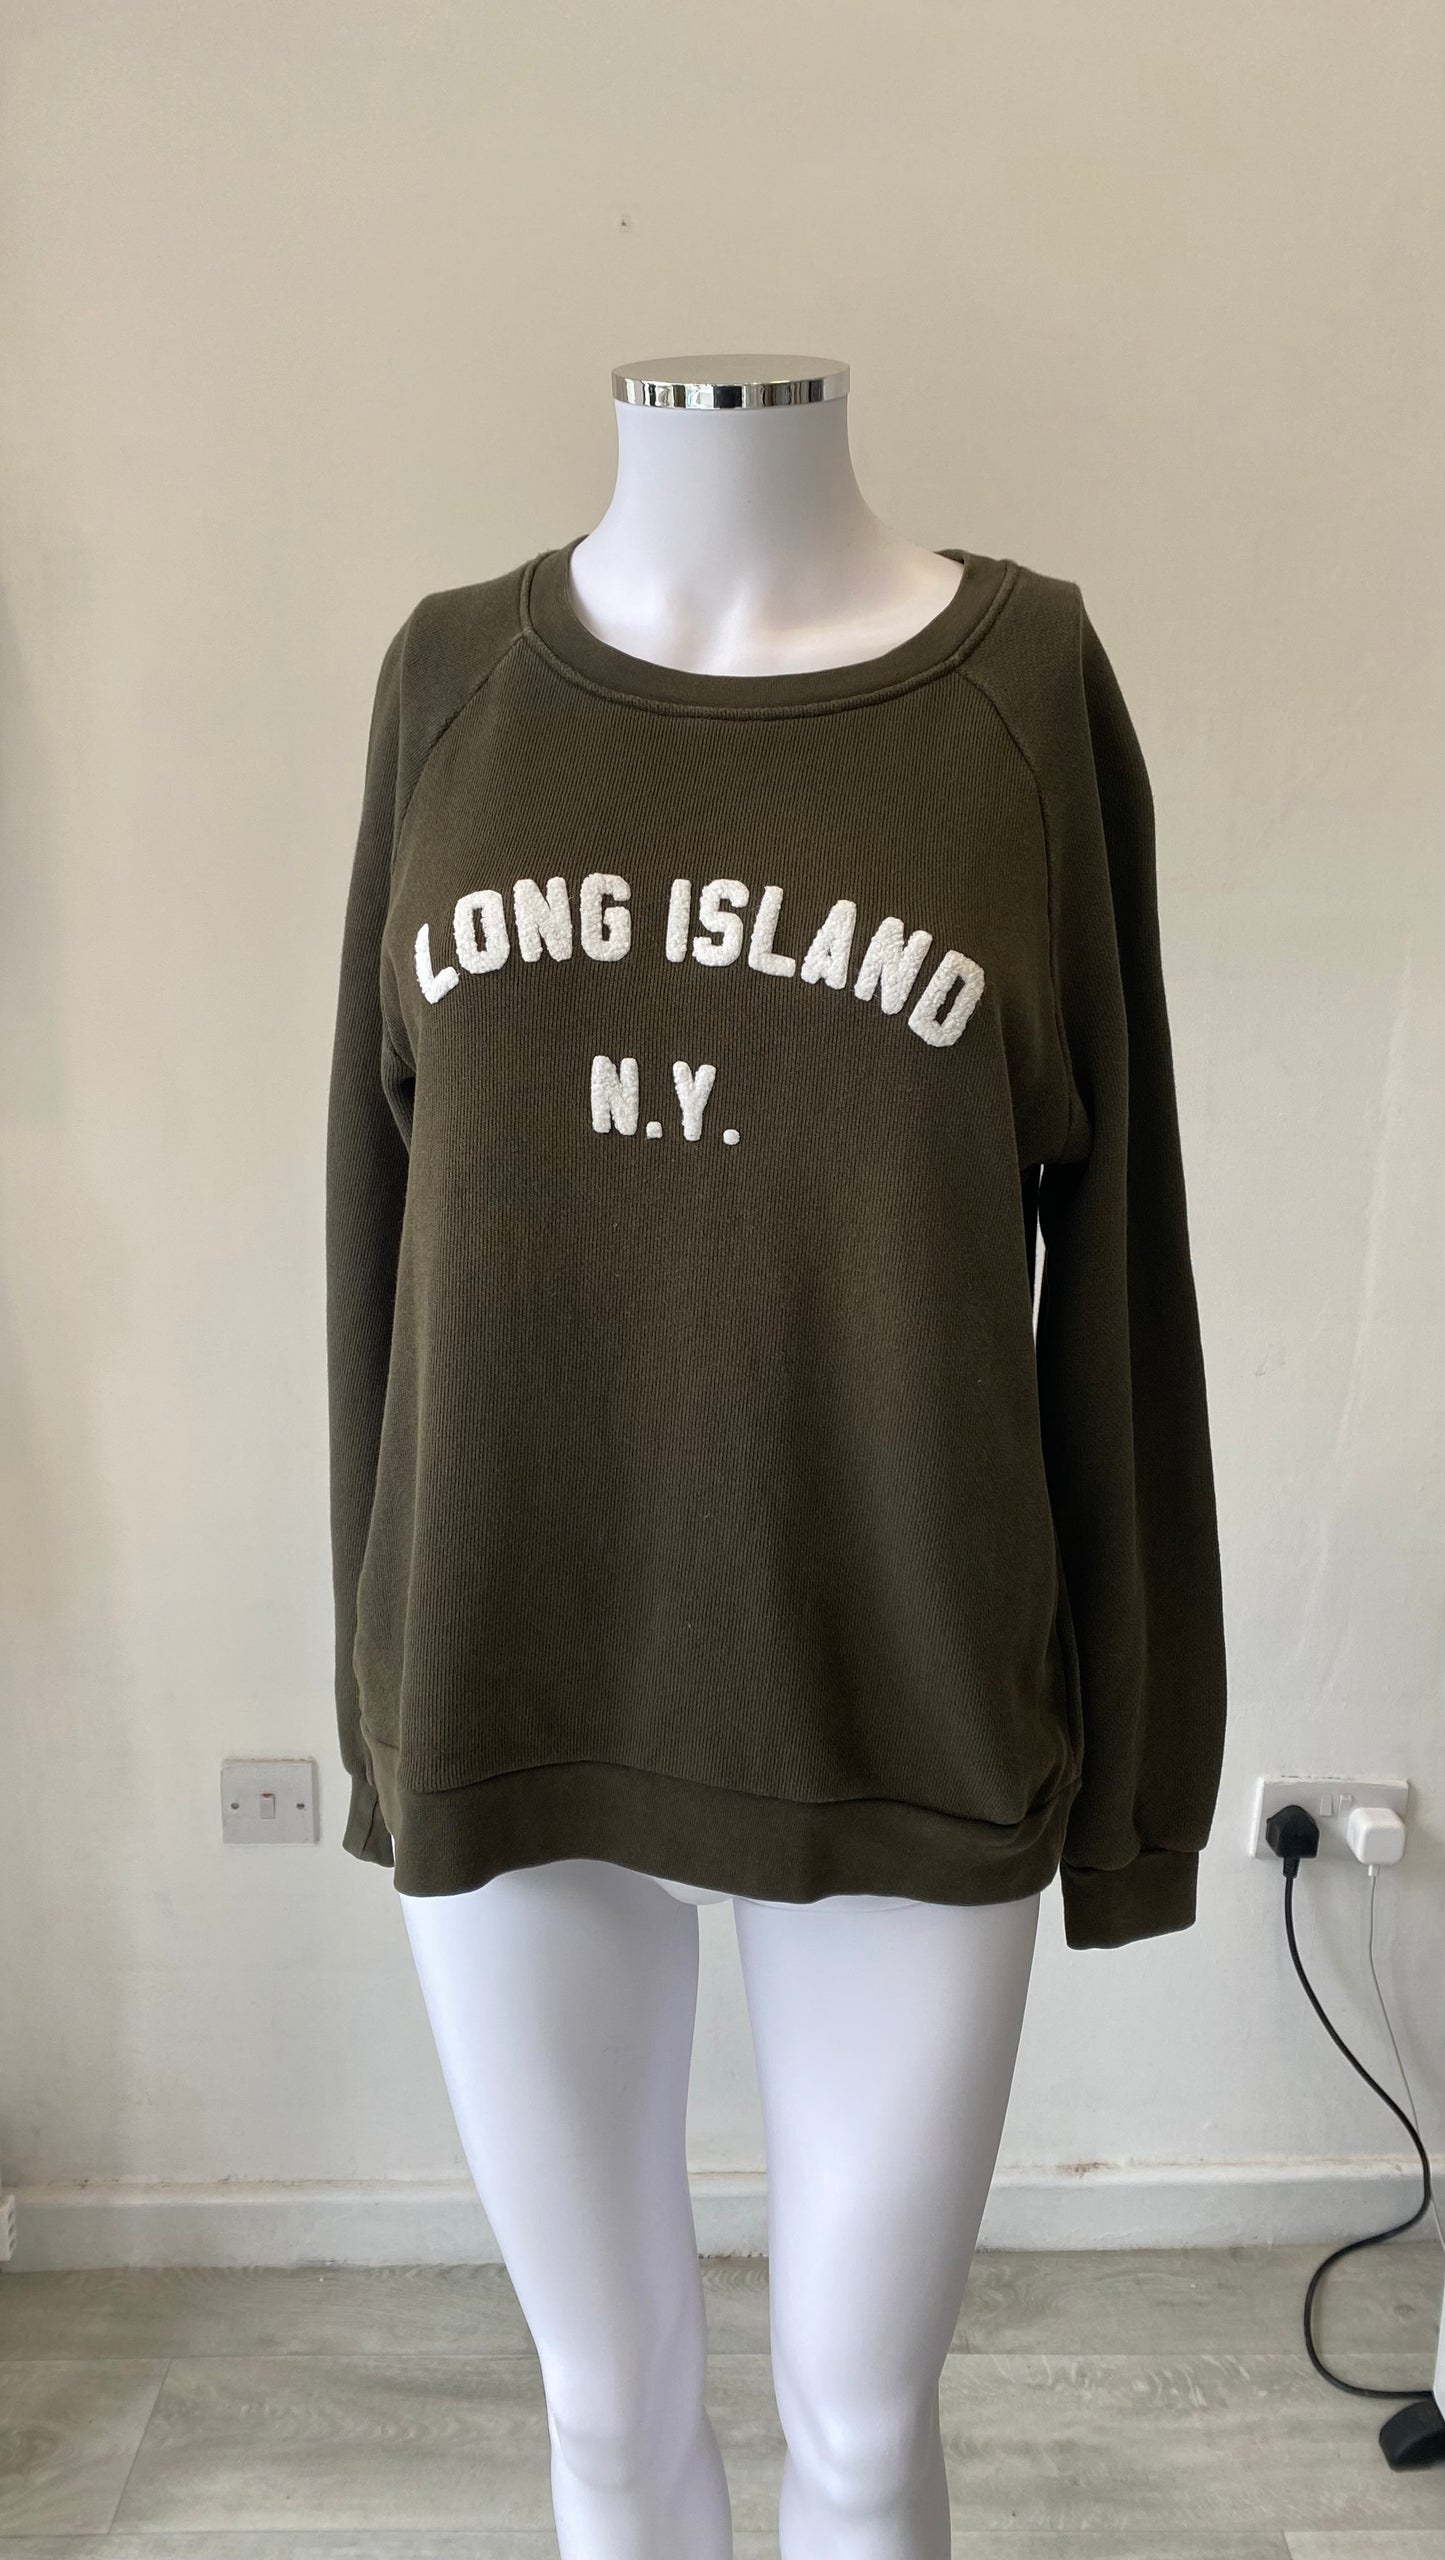 Whistles Khaki Slogan Sweatshirt Long Island Size 8-10